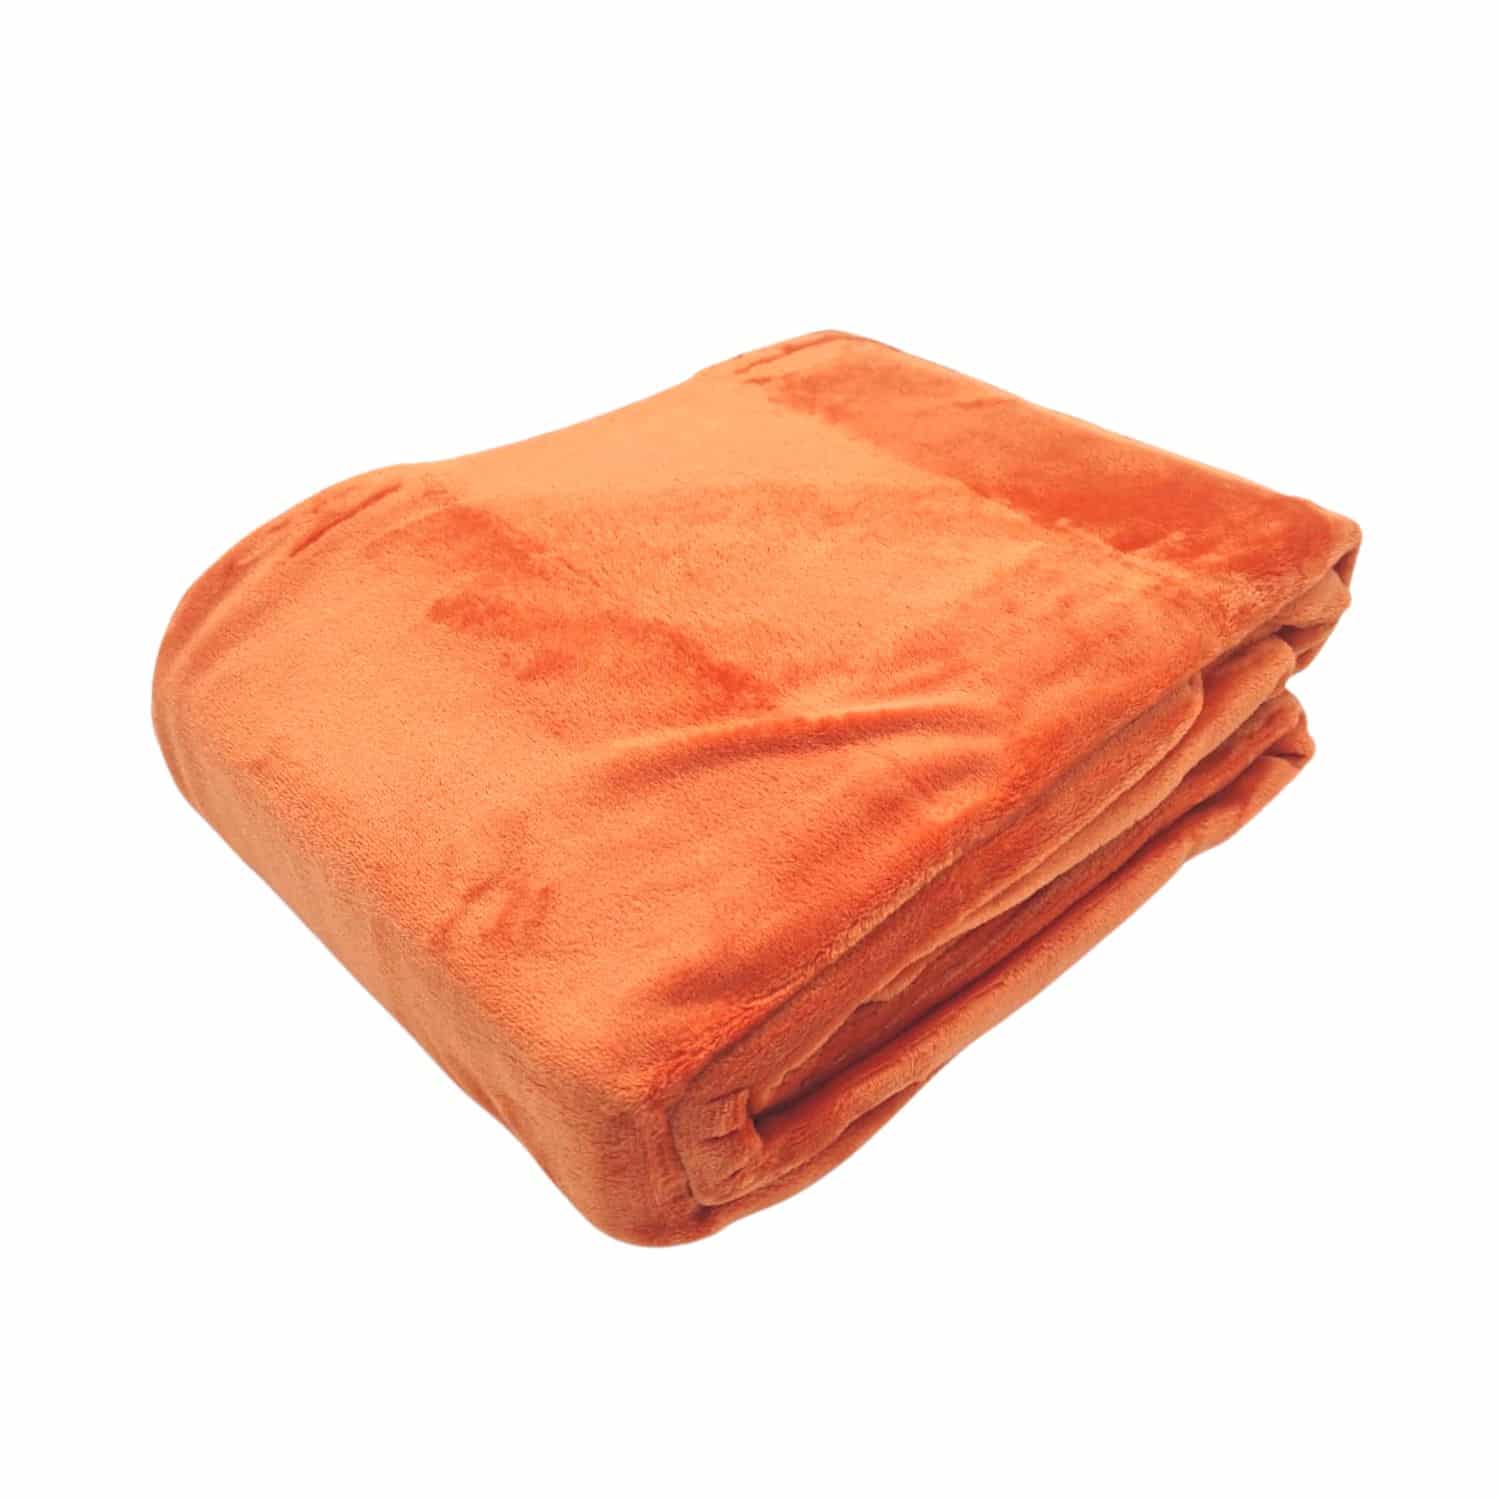 coperta-fashion-plaid-tinta-unita-coral-morbida-arancio-ruggine